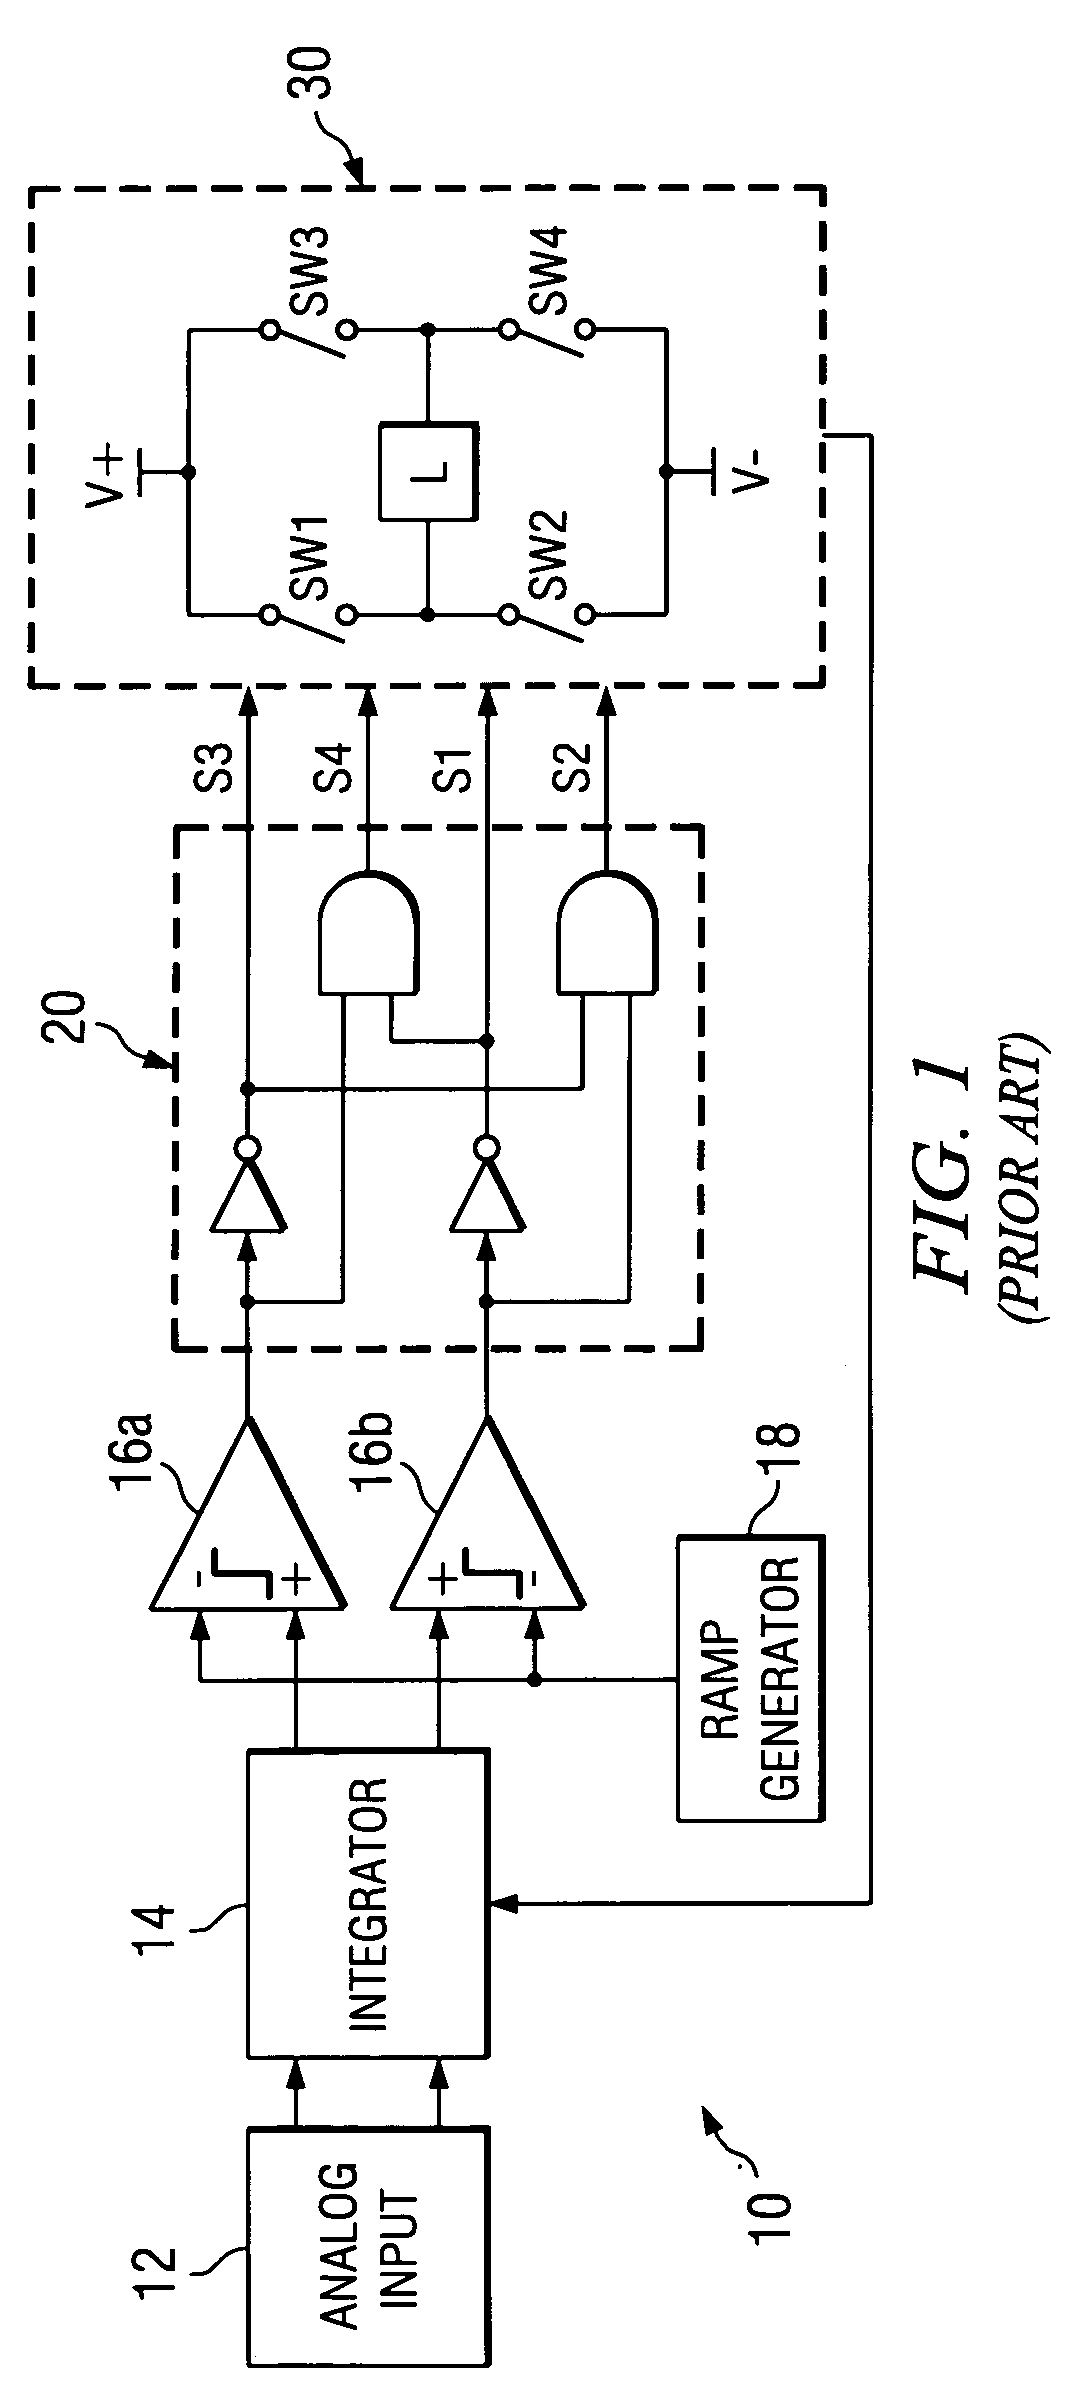 Class-D amplifier having high order loop filtering